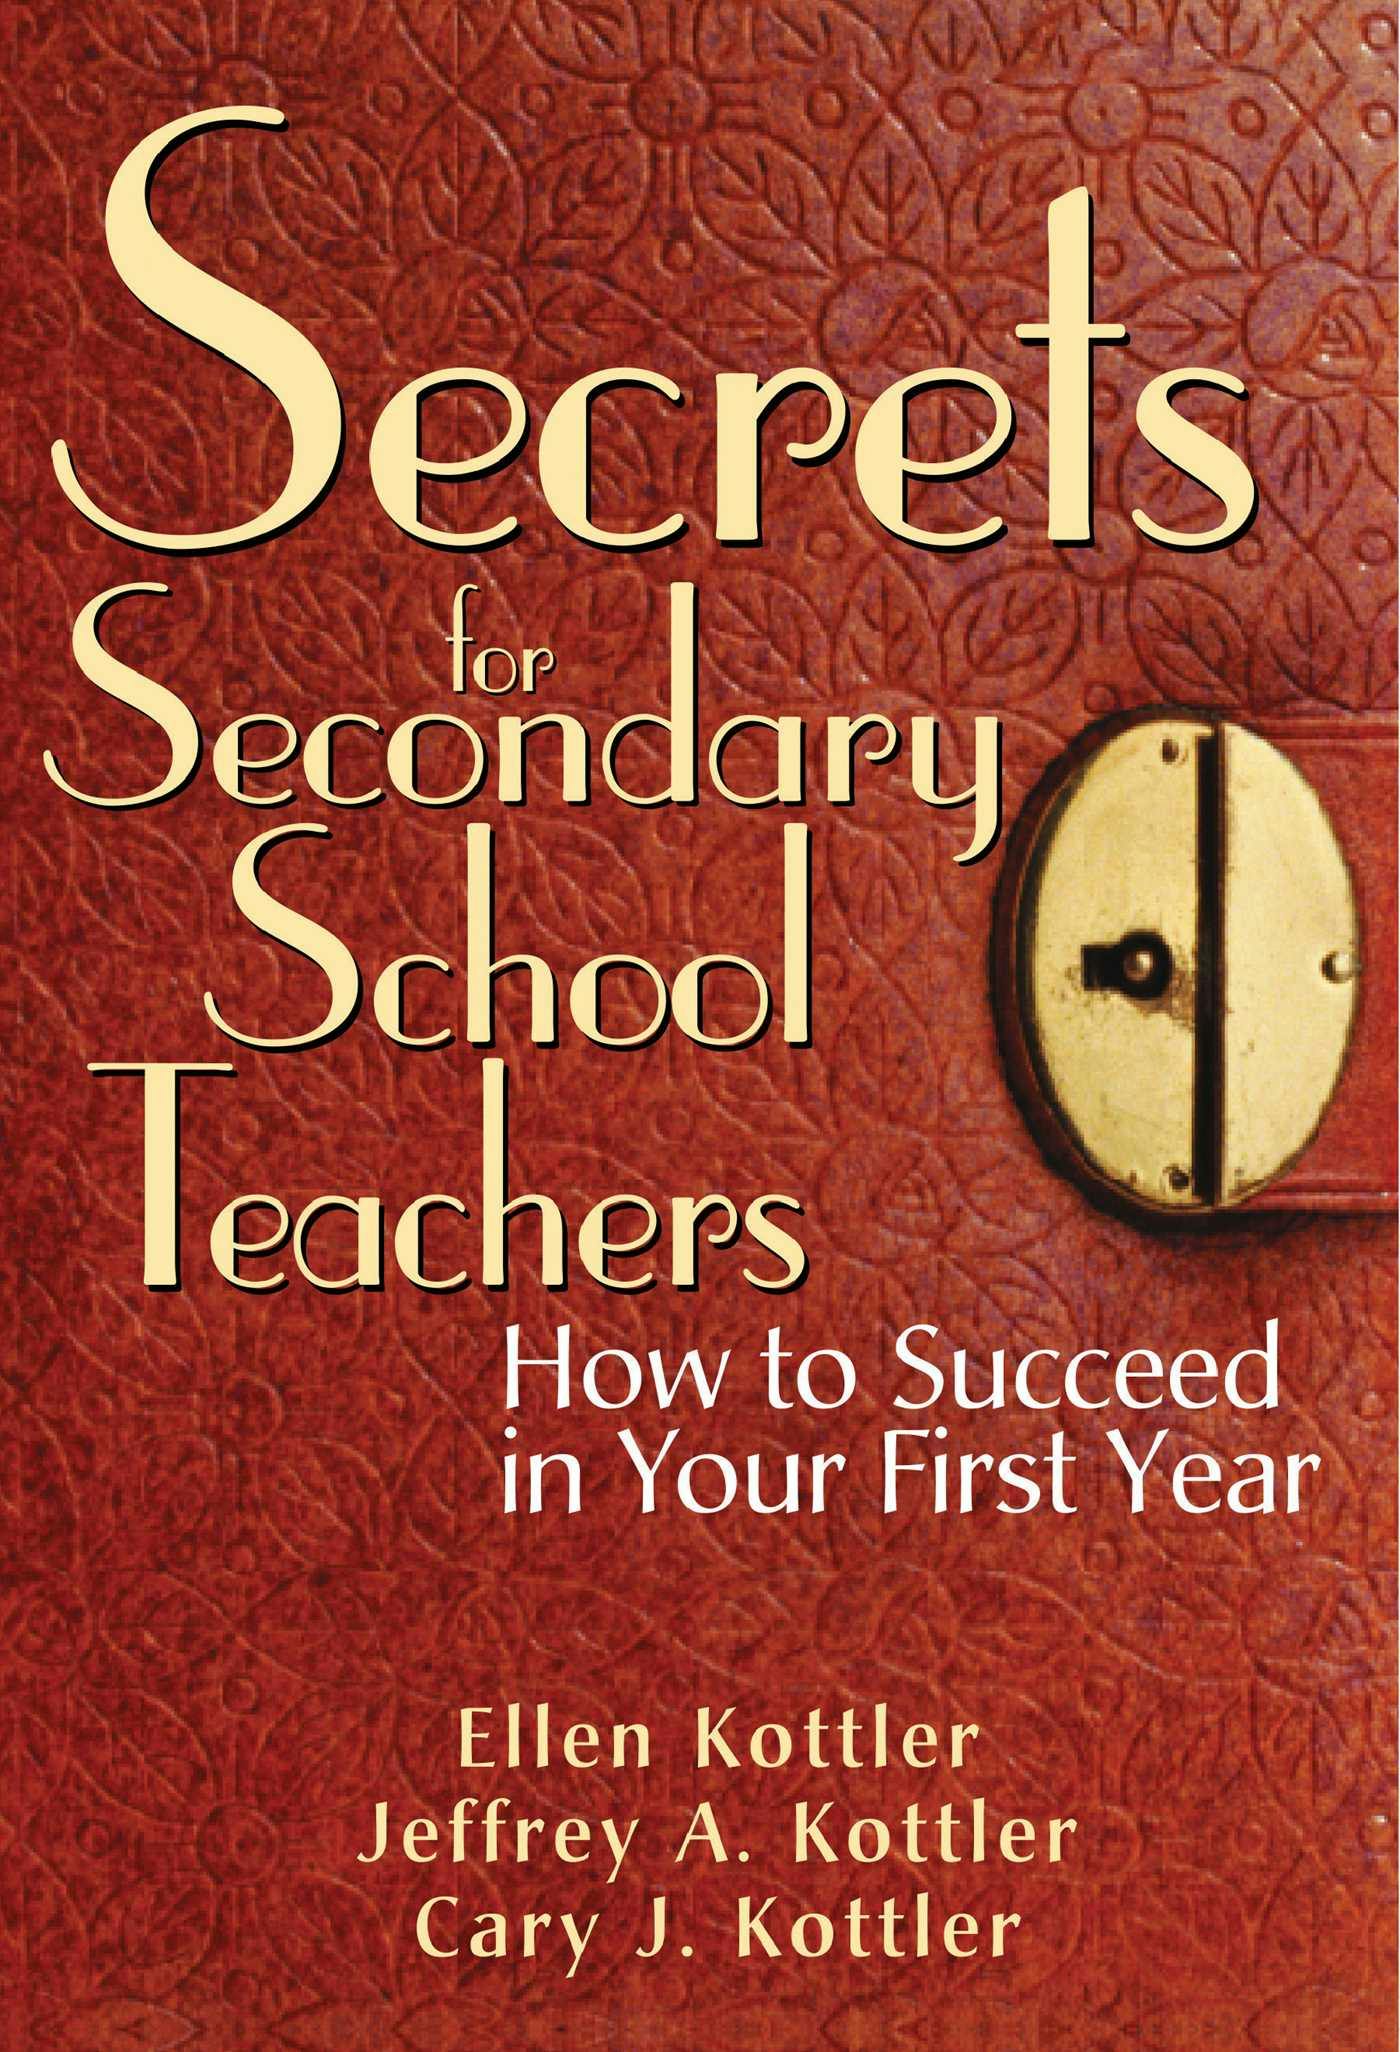 Secrets for Secondary School Teachers: How to Succeed in Your First Year - Ellen Kottler, Cary J. Kottler, Jeffrey A. Kottler